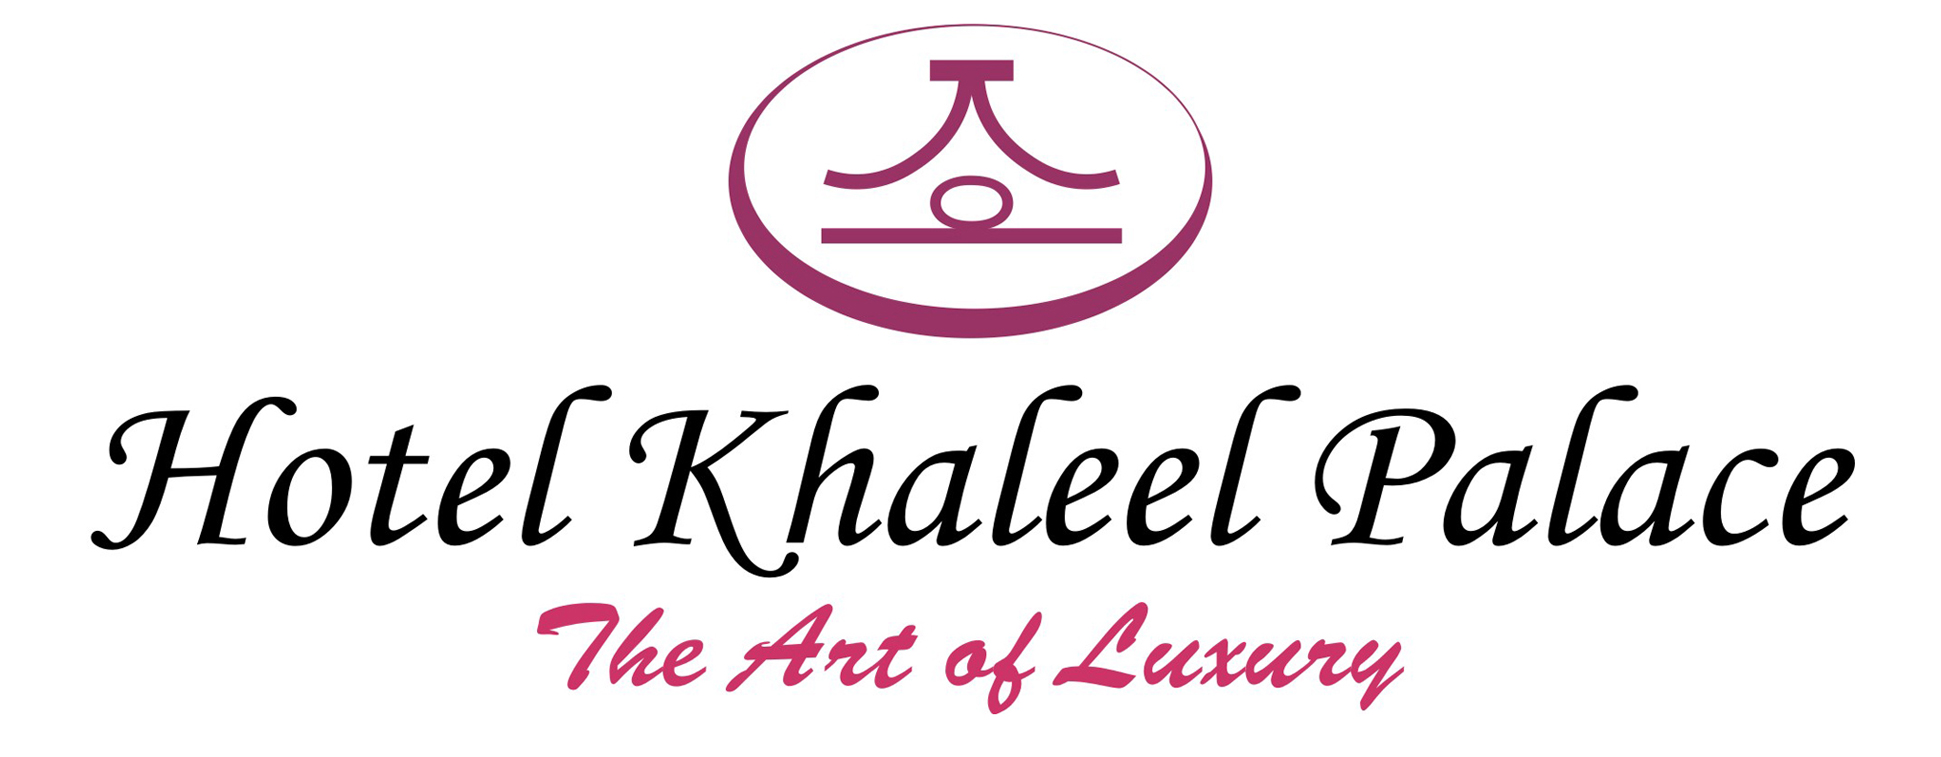 Hotel Khaleel Palace Logo